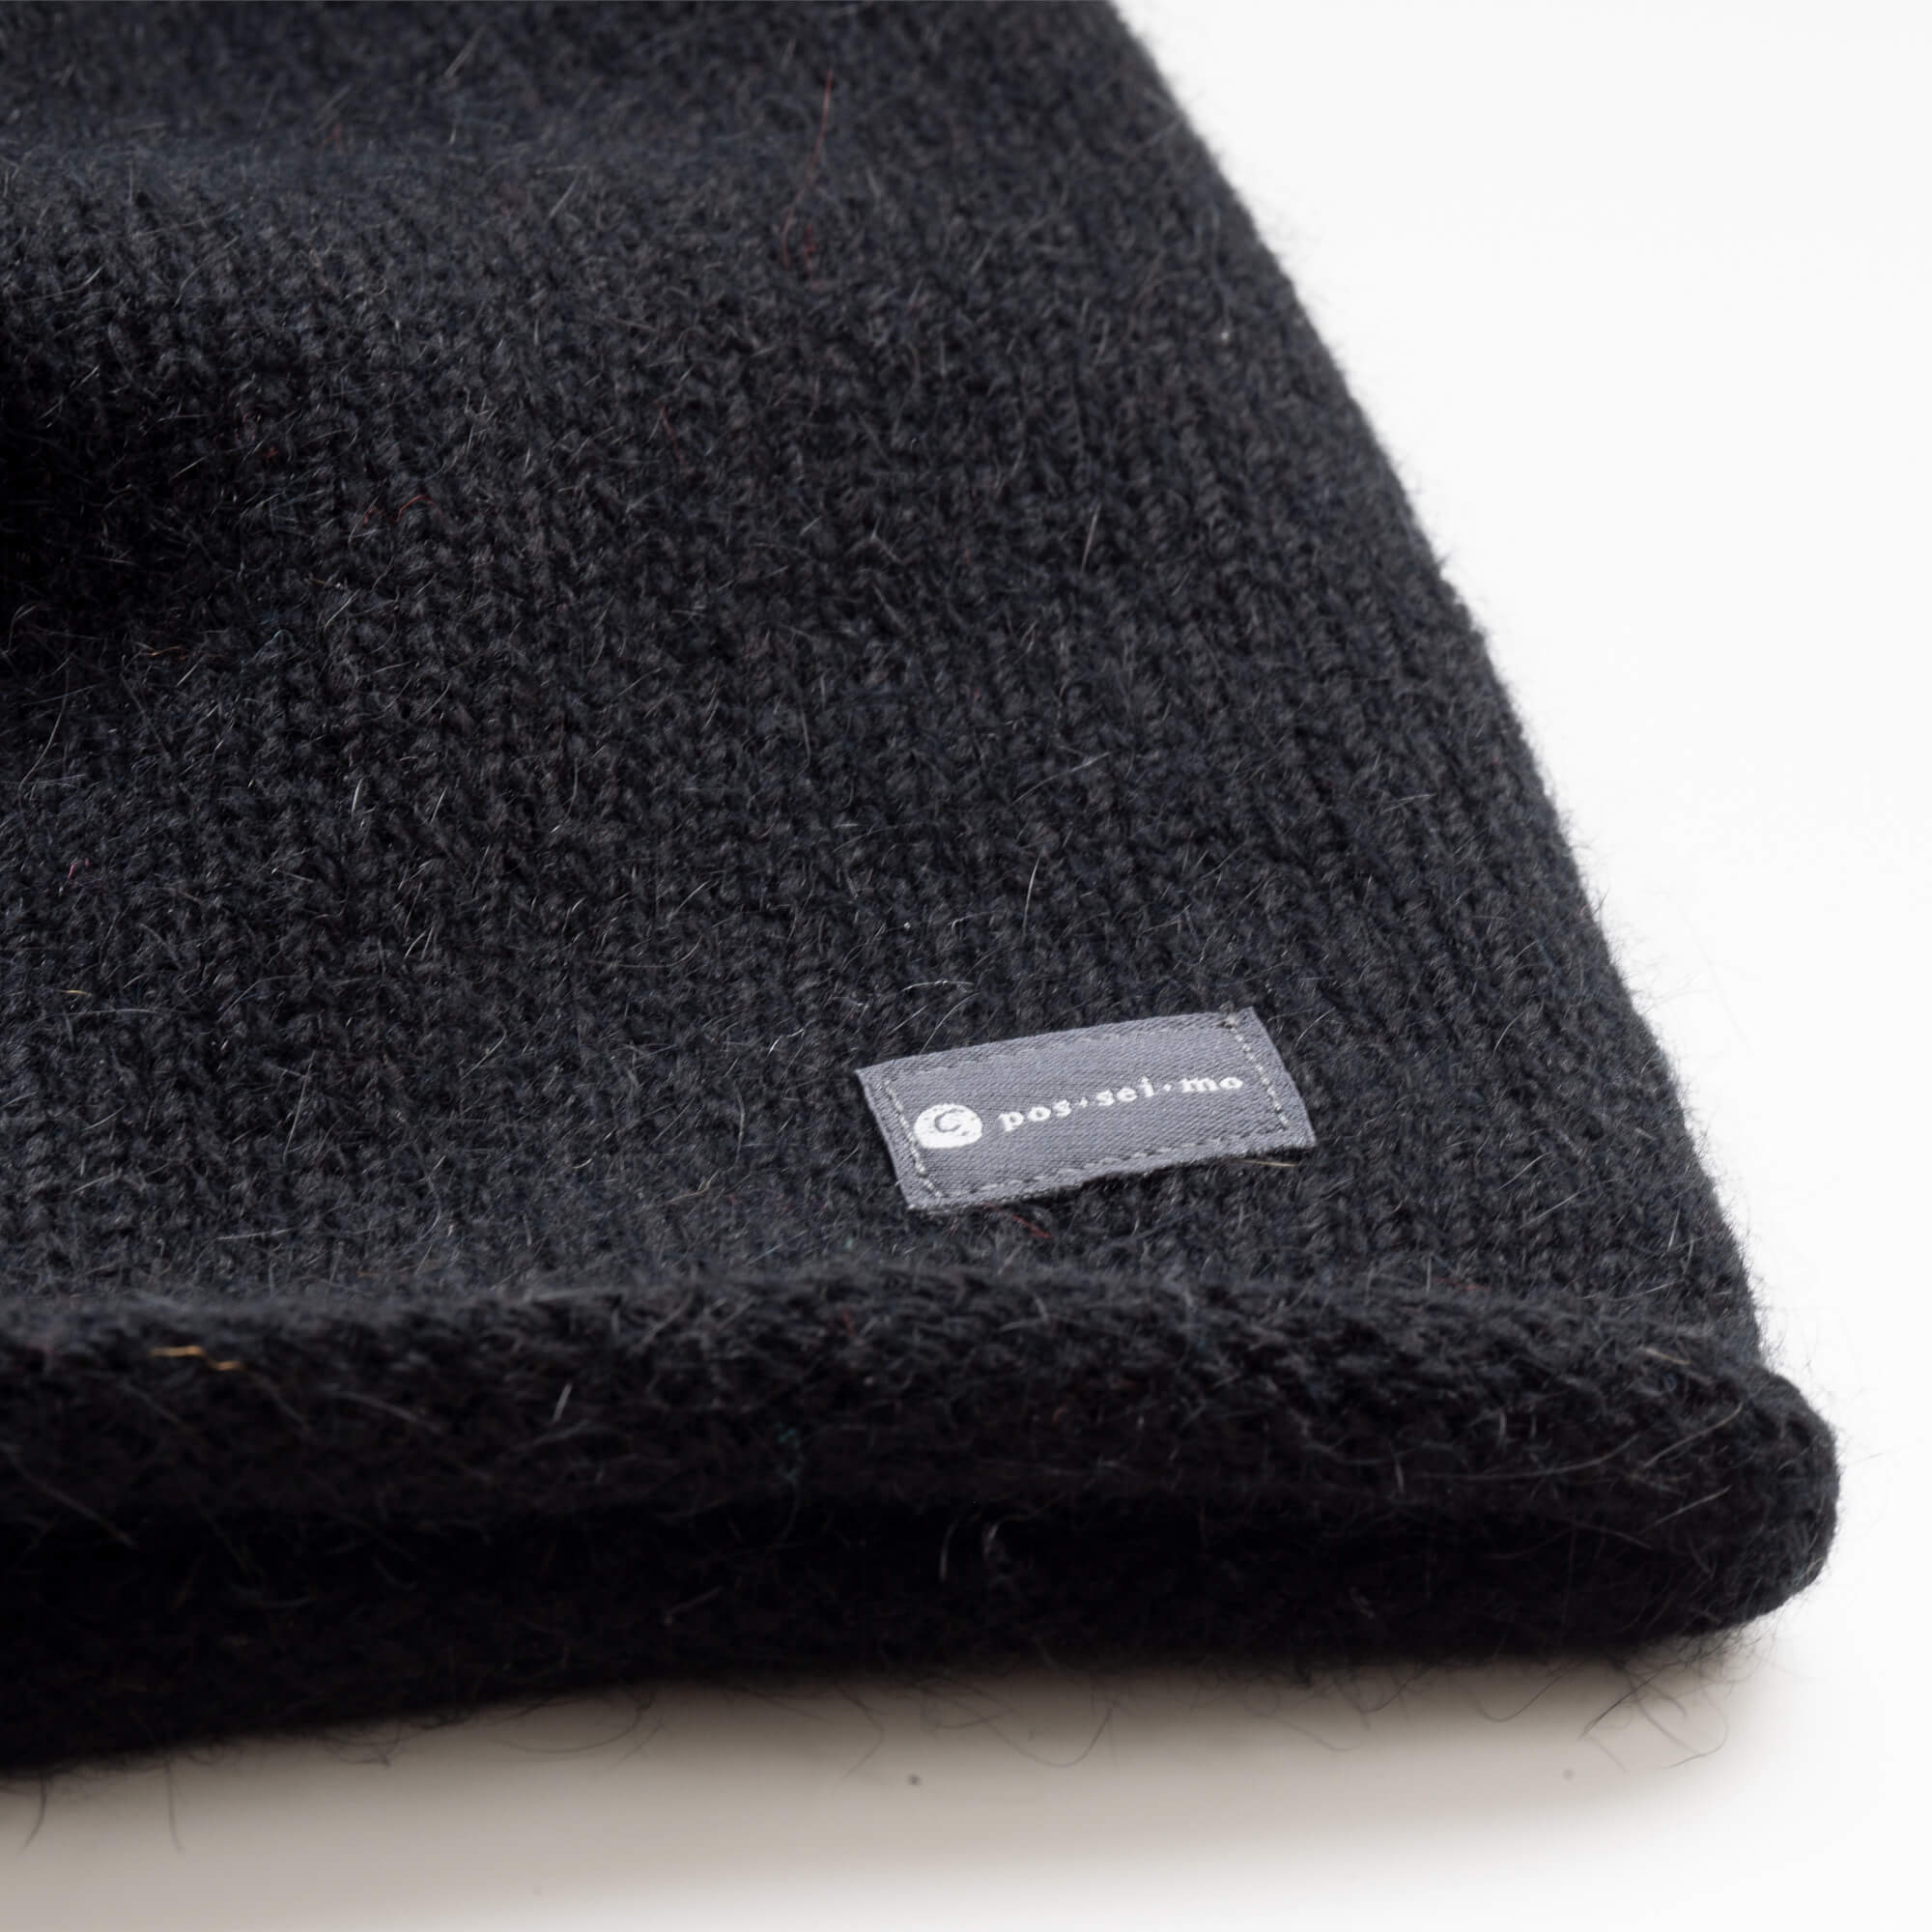 Mütze mit Rollrand - seamless knitting